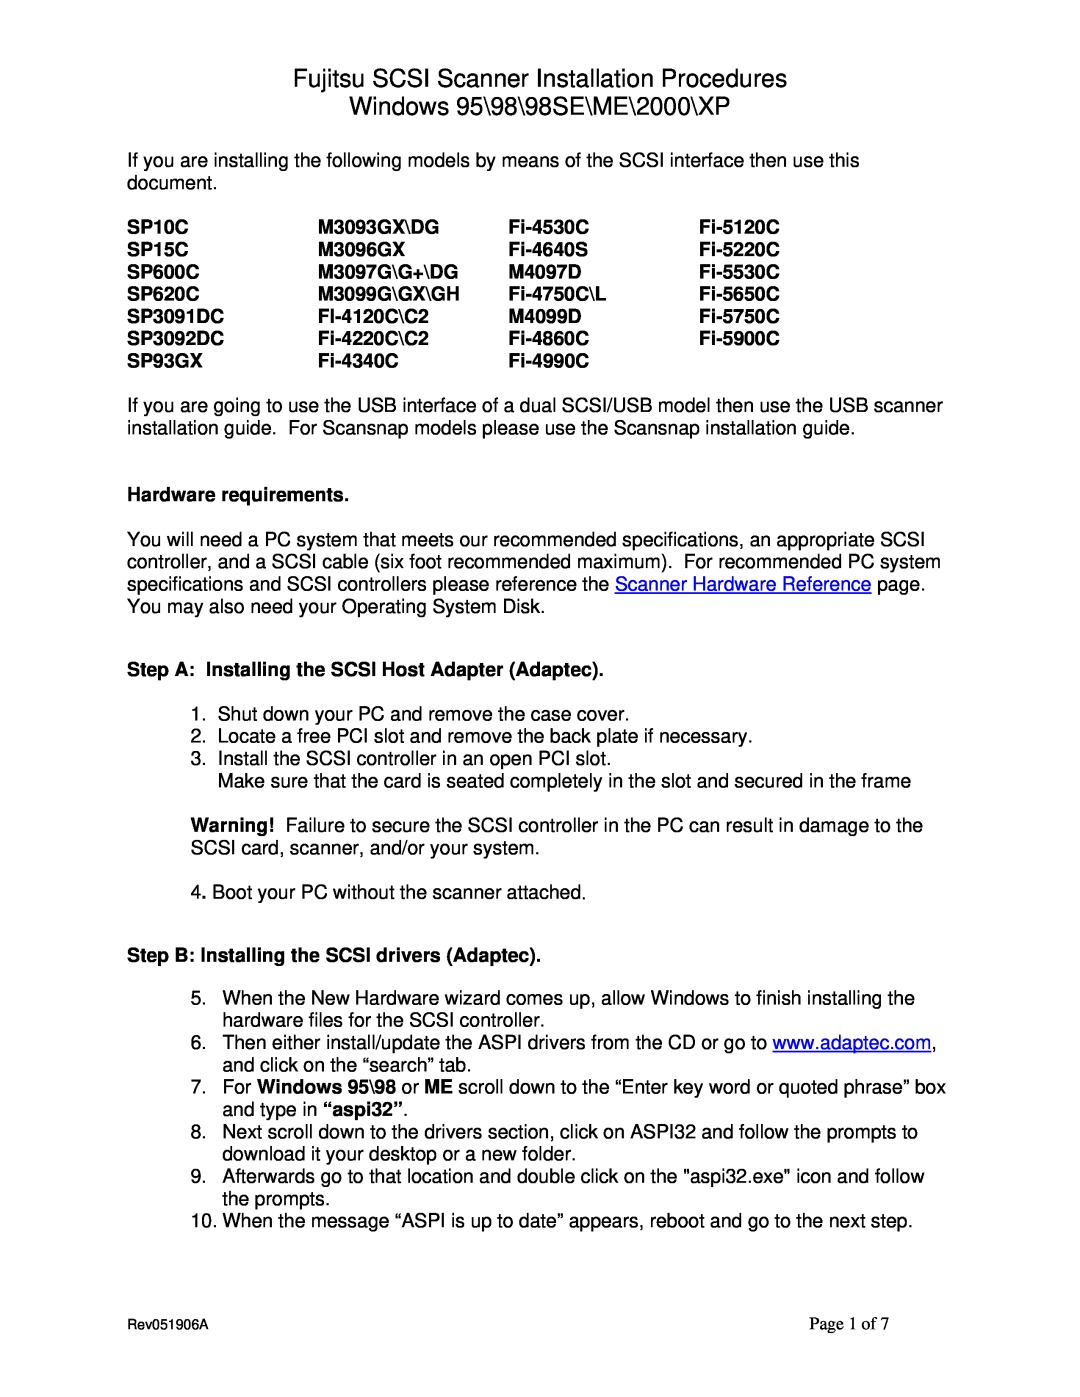 Fujitsu SP620C specifications Fujitsu SCSI Scanner Installation Procedures, Windows 95\98\98SE\ME\2000\XP, SP10C, Fi-4530C 